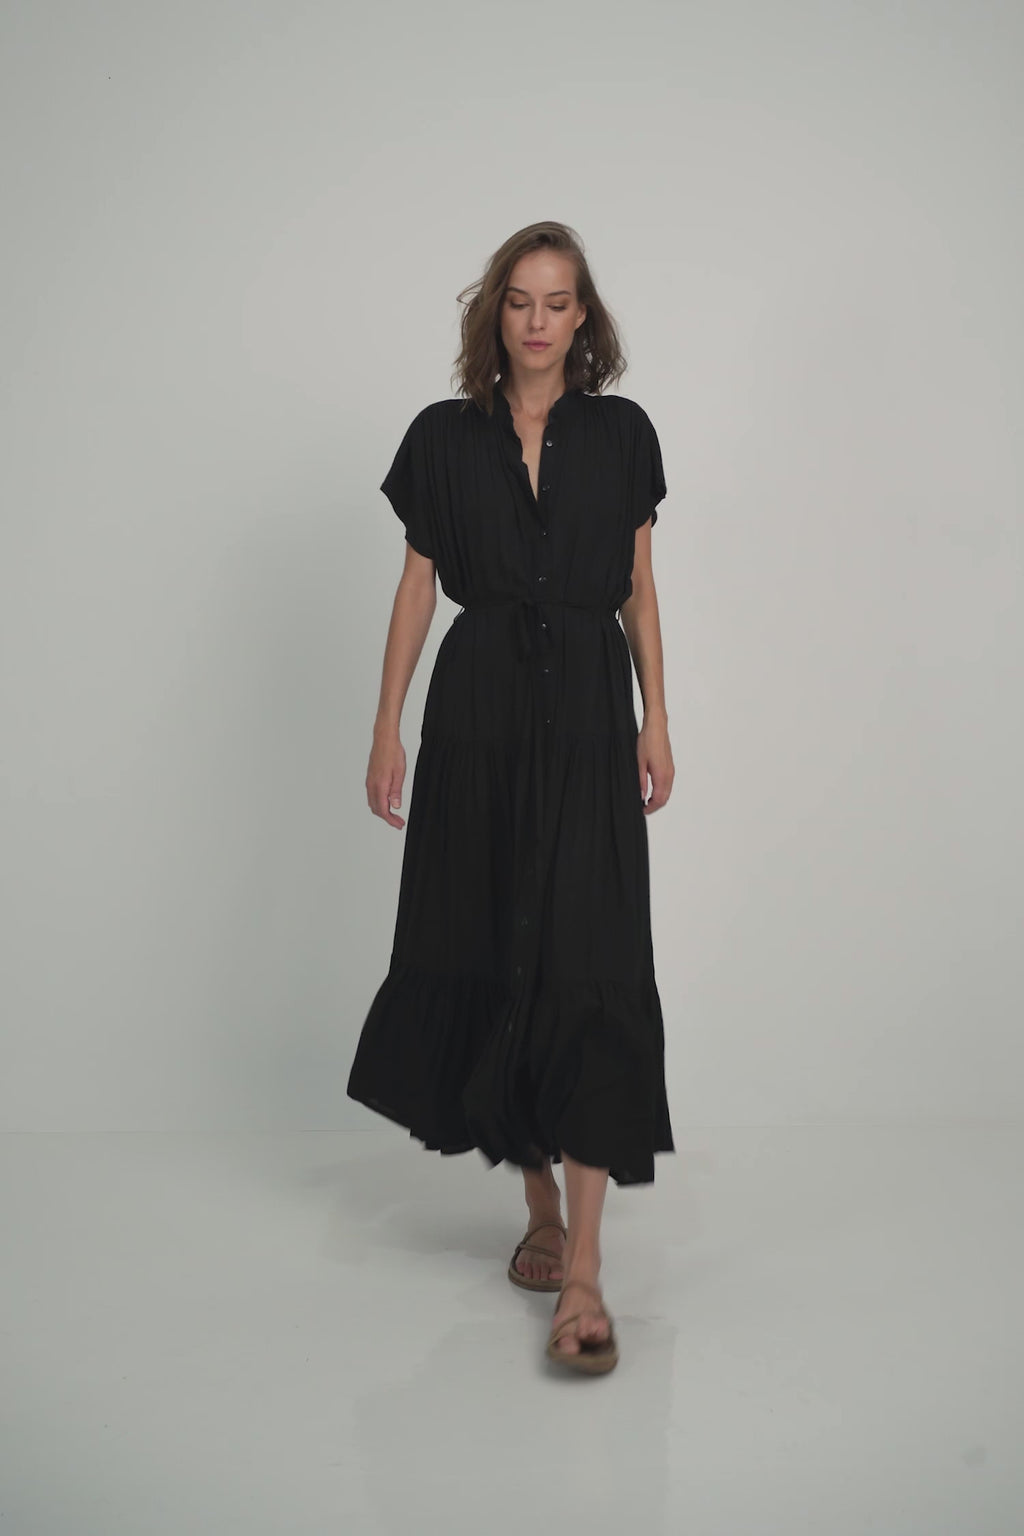 A Woman Wearing a Classic Black Maxi Shirt Dress for Summer